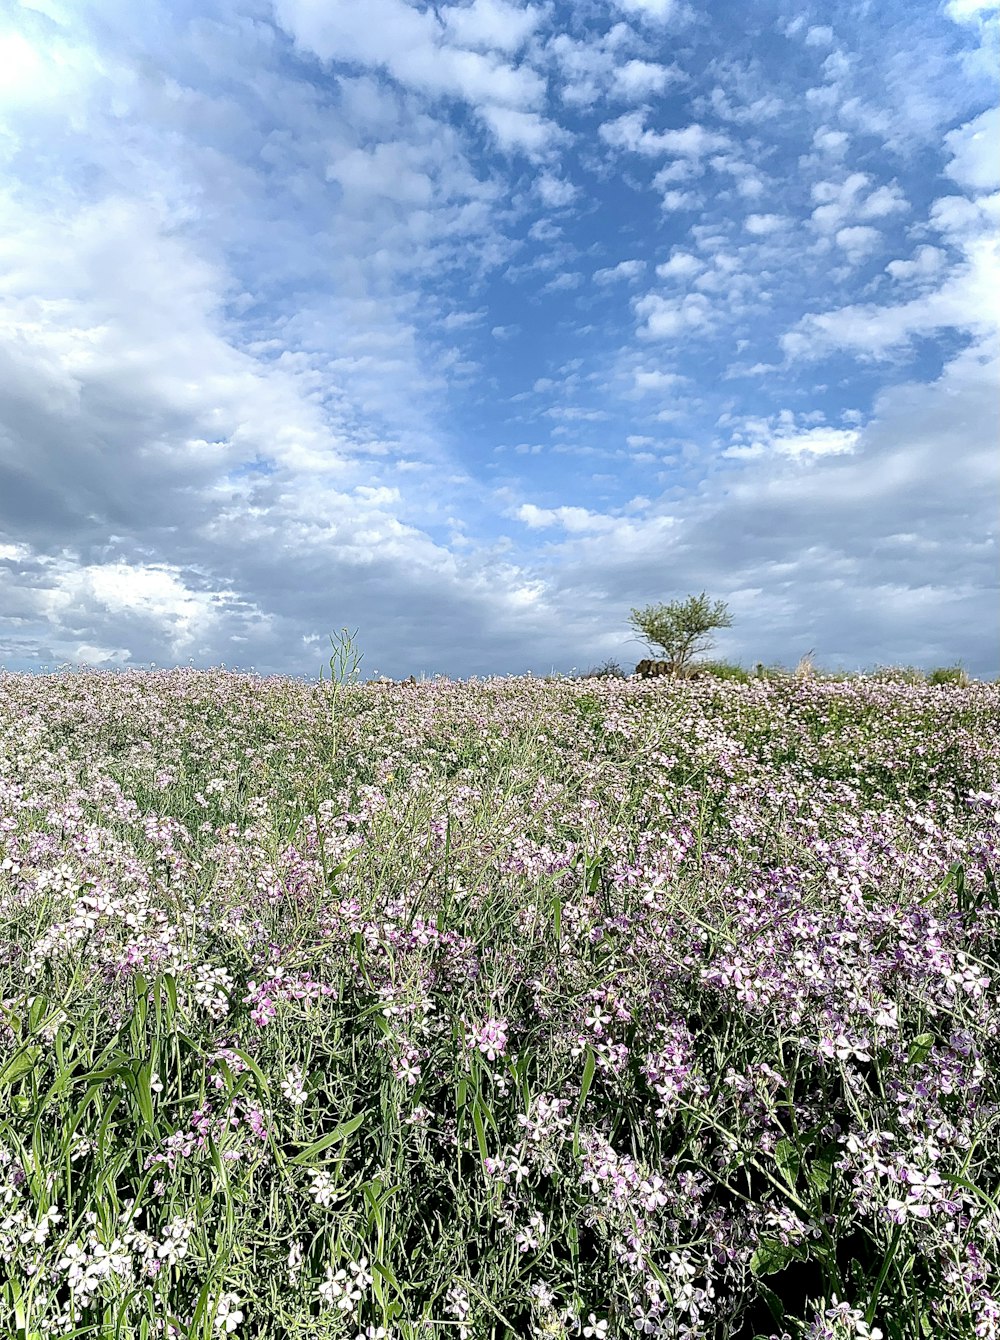 a field full of purple flowers under a cloudy blue sky